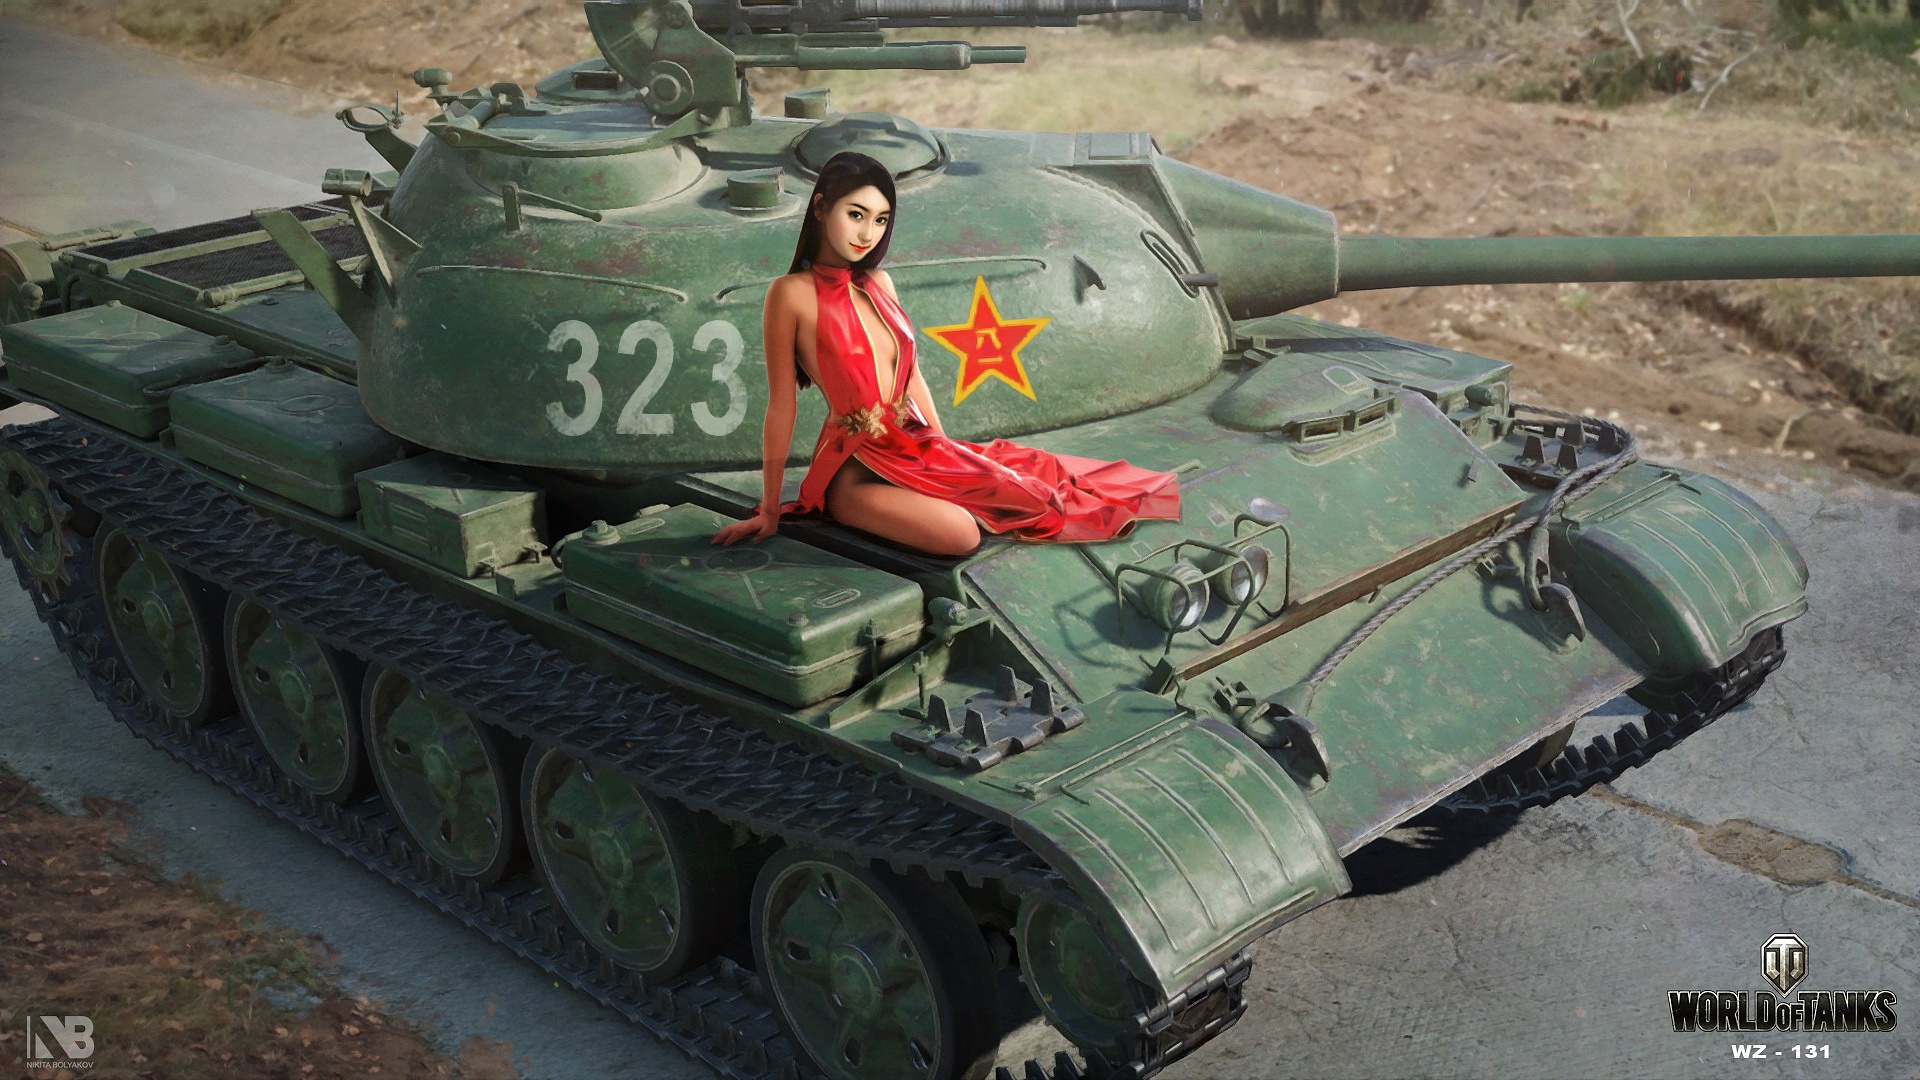 https://img1.goodfon.ru/original/1920x1080/c/e7/world-of-tanks-wz-131-kitaiskii-legkii-tank-devushka-aziatka.jpg